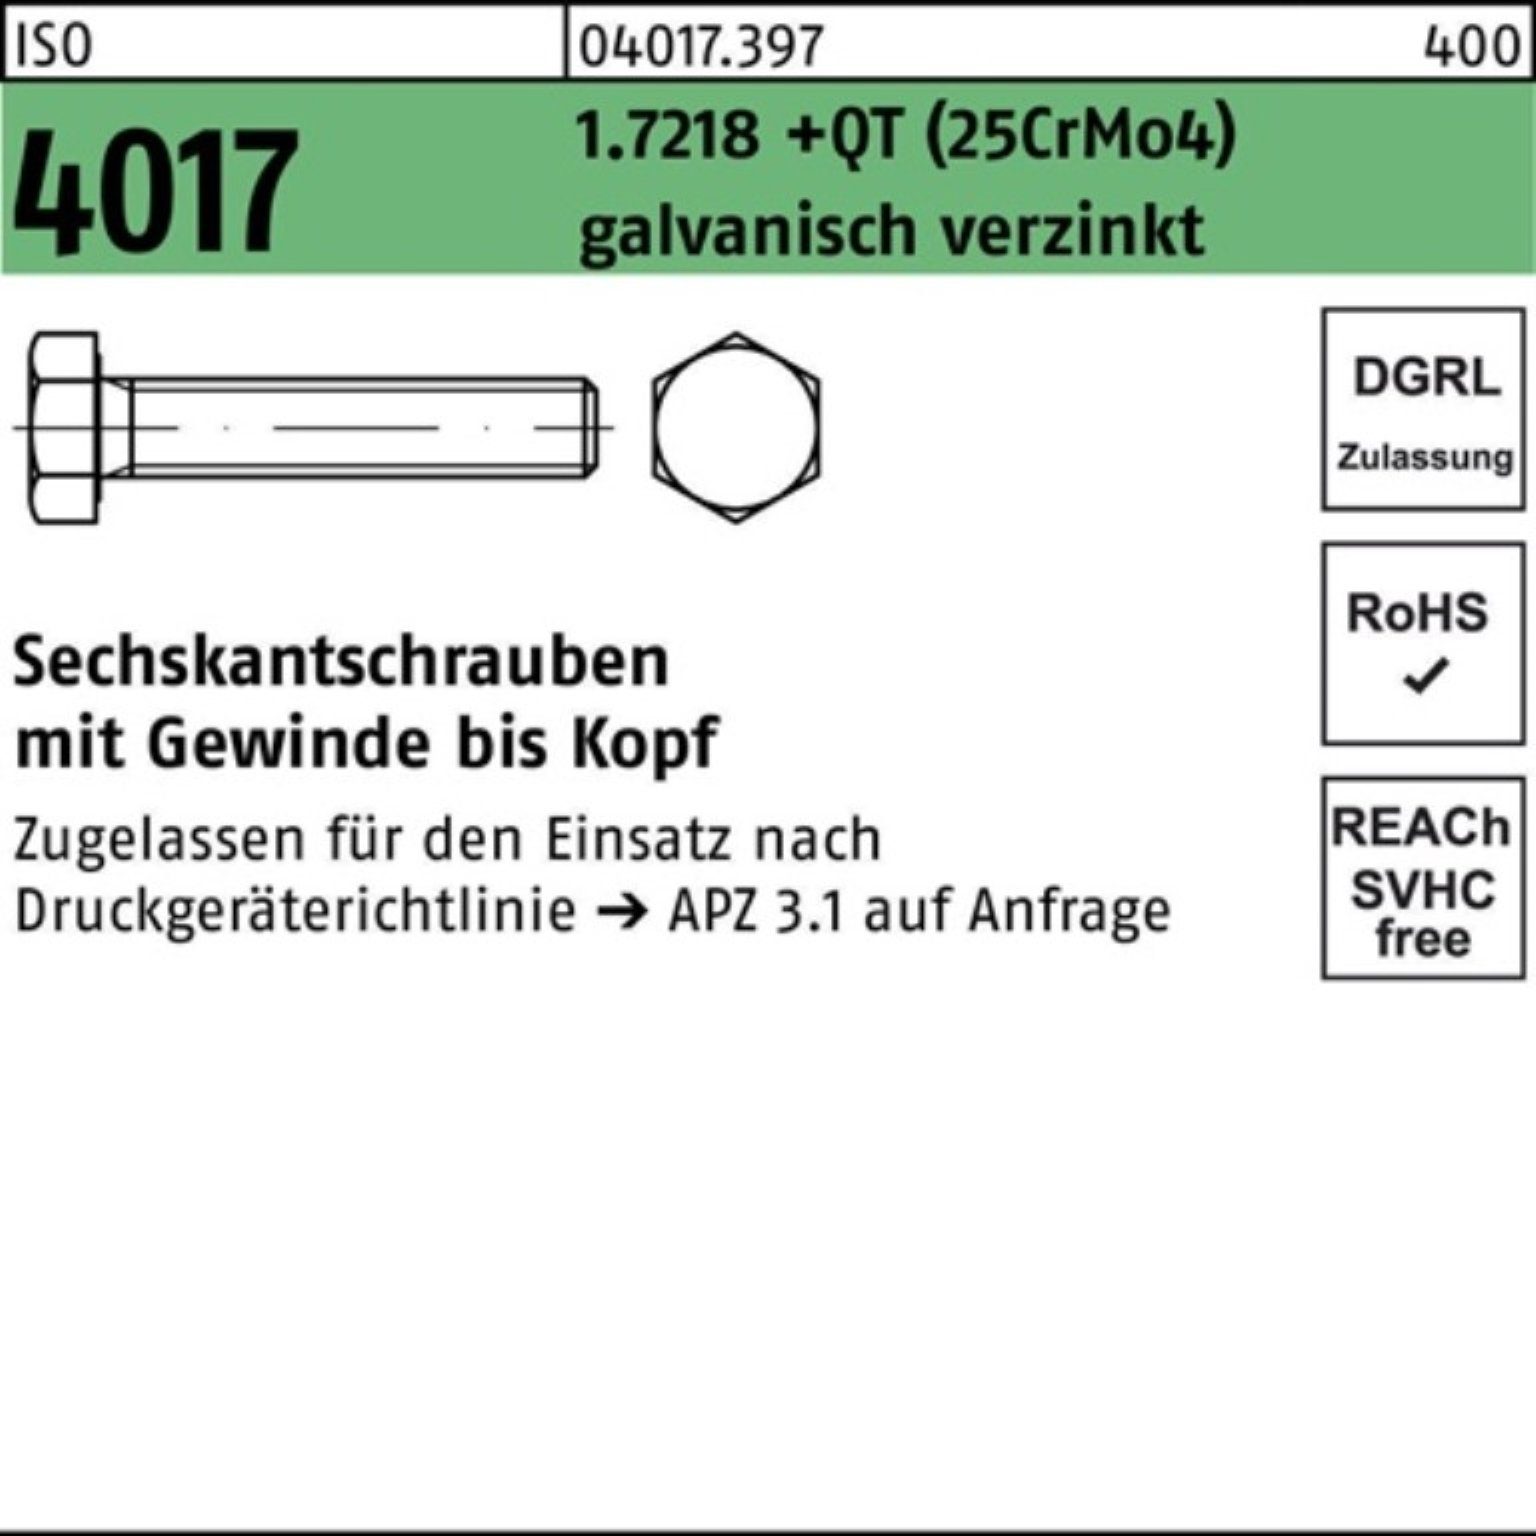 Bufab Sechskantschraube 100er Pack Sechskantschraube +QT 4017 VG (25CrMo4) ISO g 1.7218 M12x80